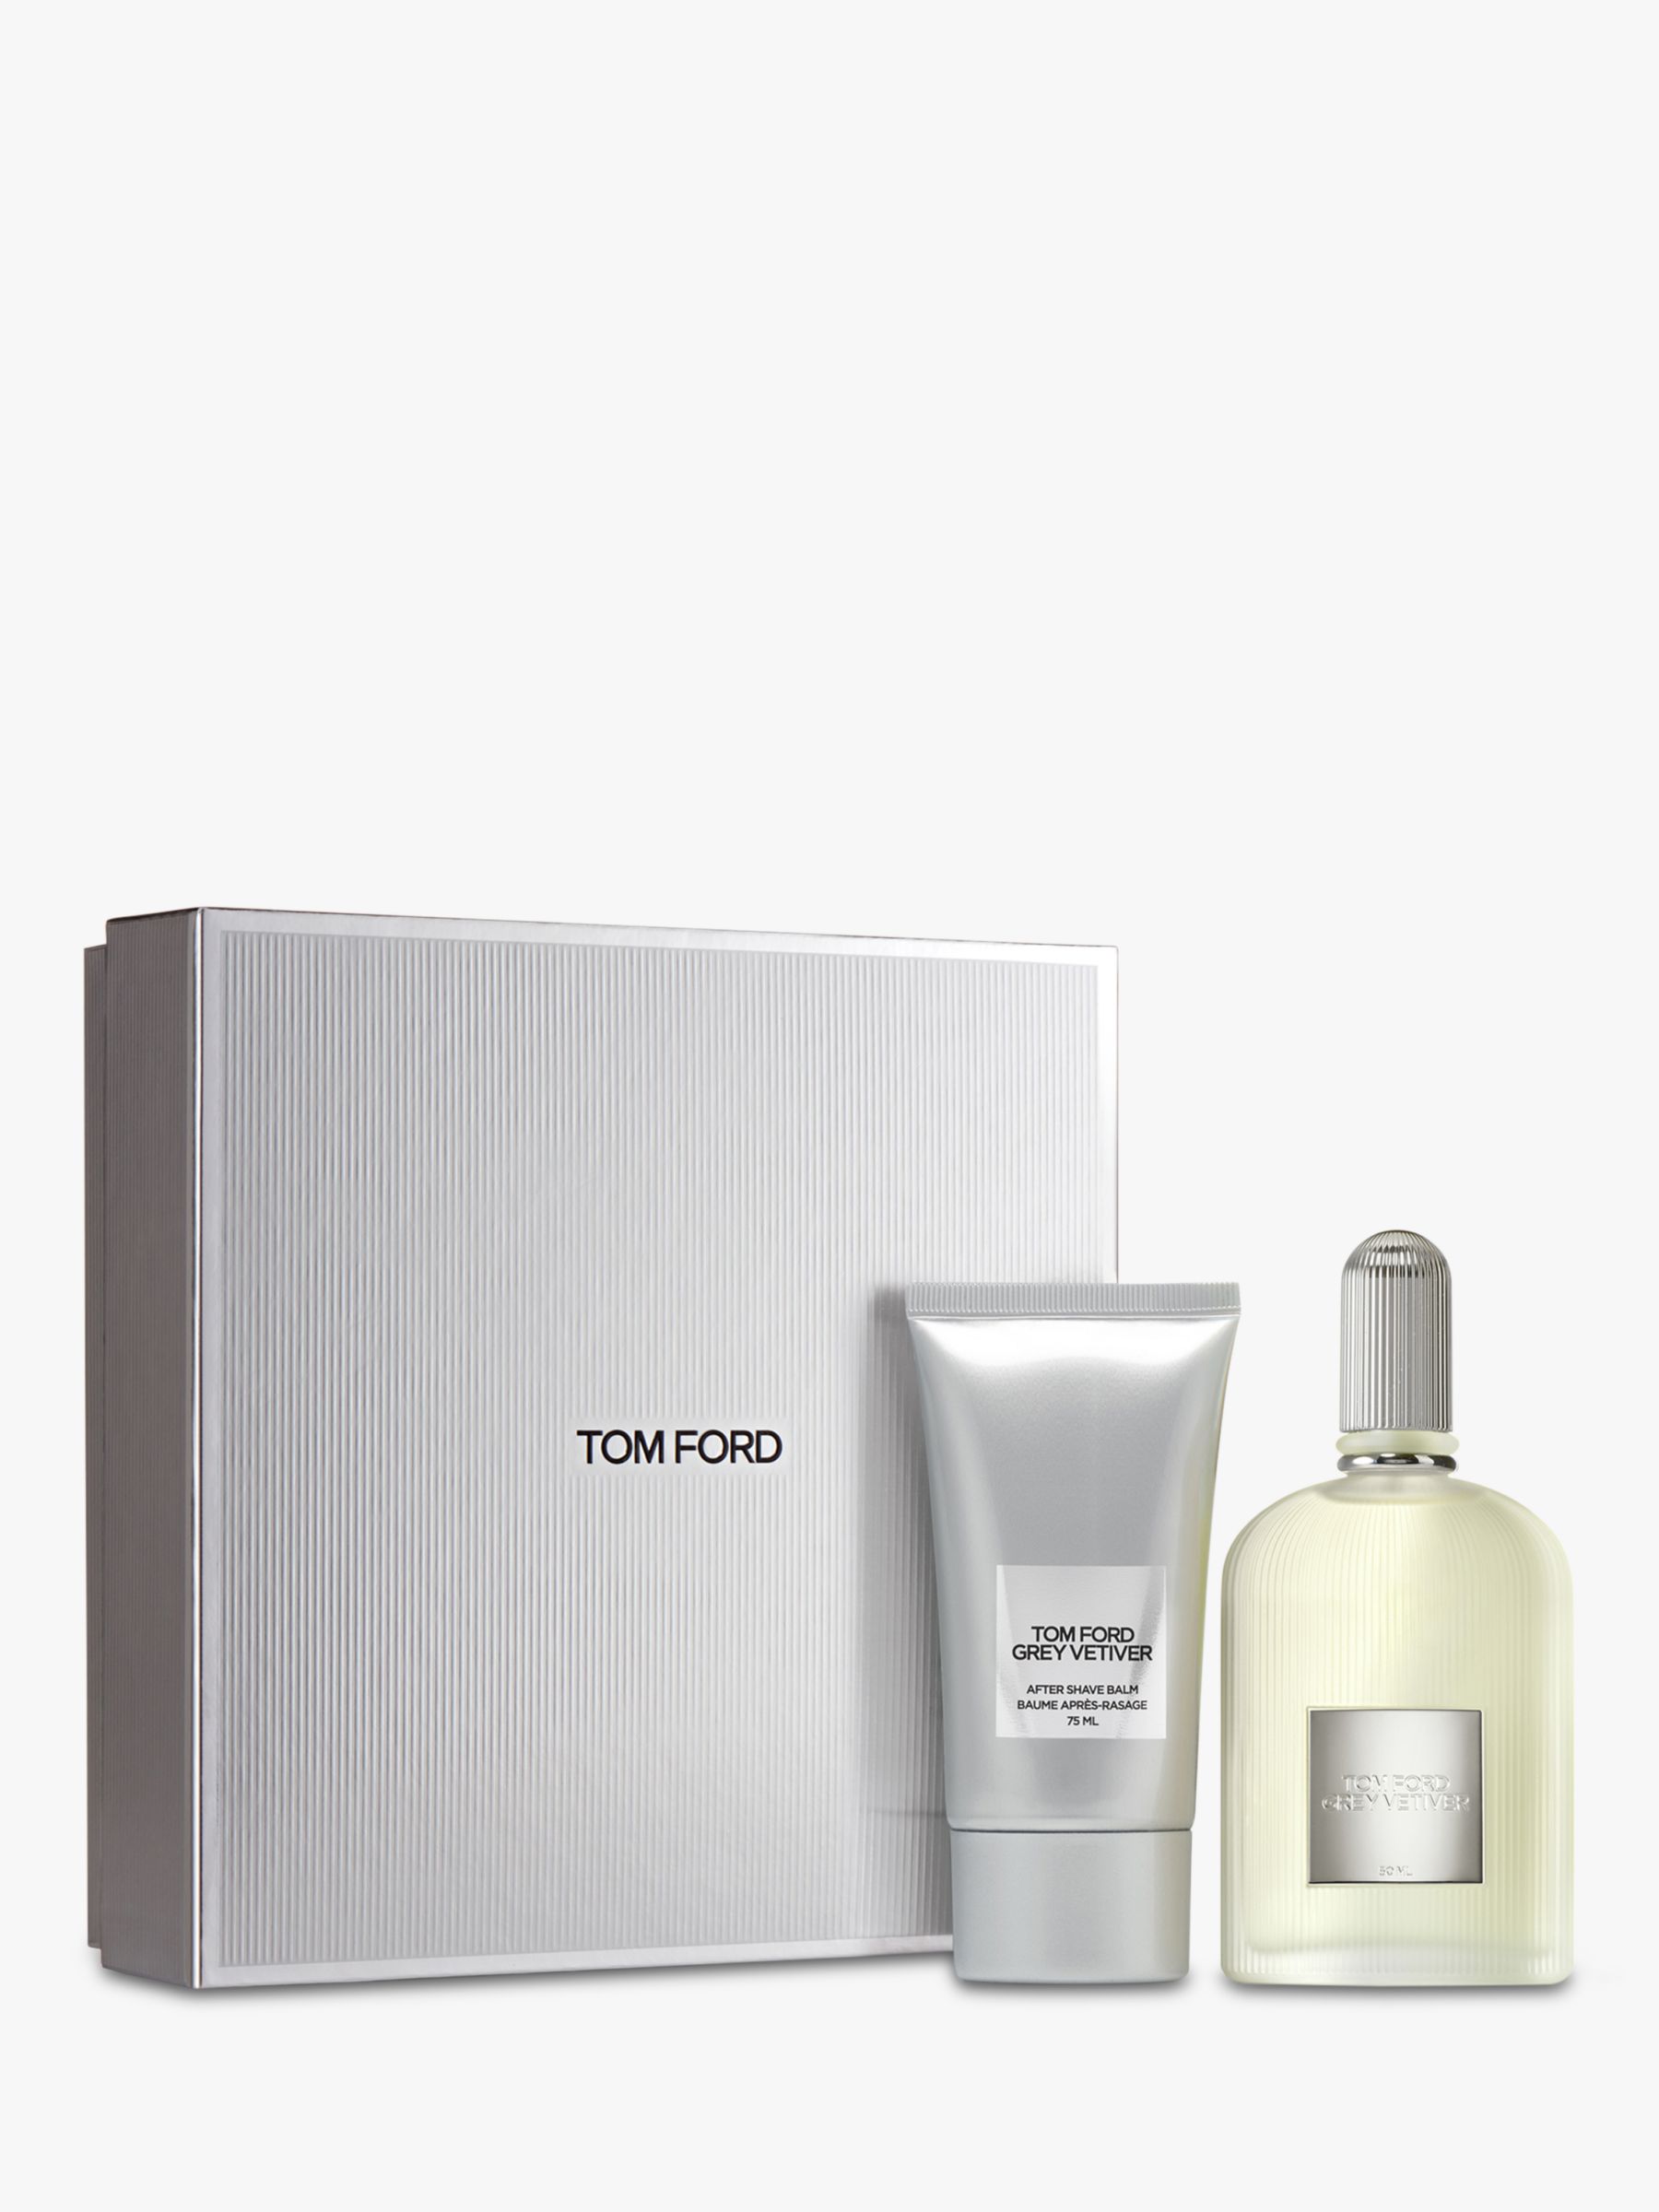 TOM FORD Grey Vetiver Collection 50ml Eau de Parfum Gift Set